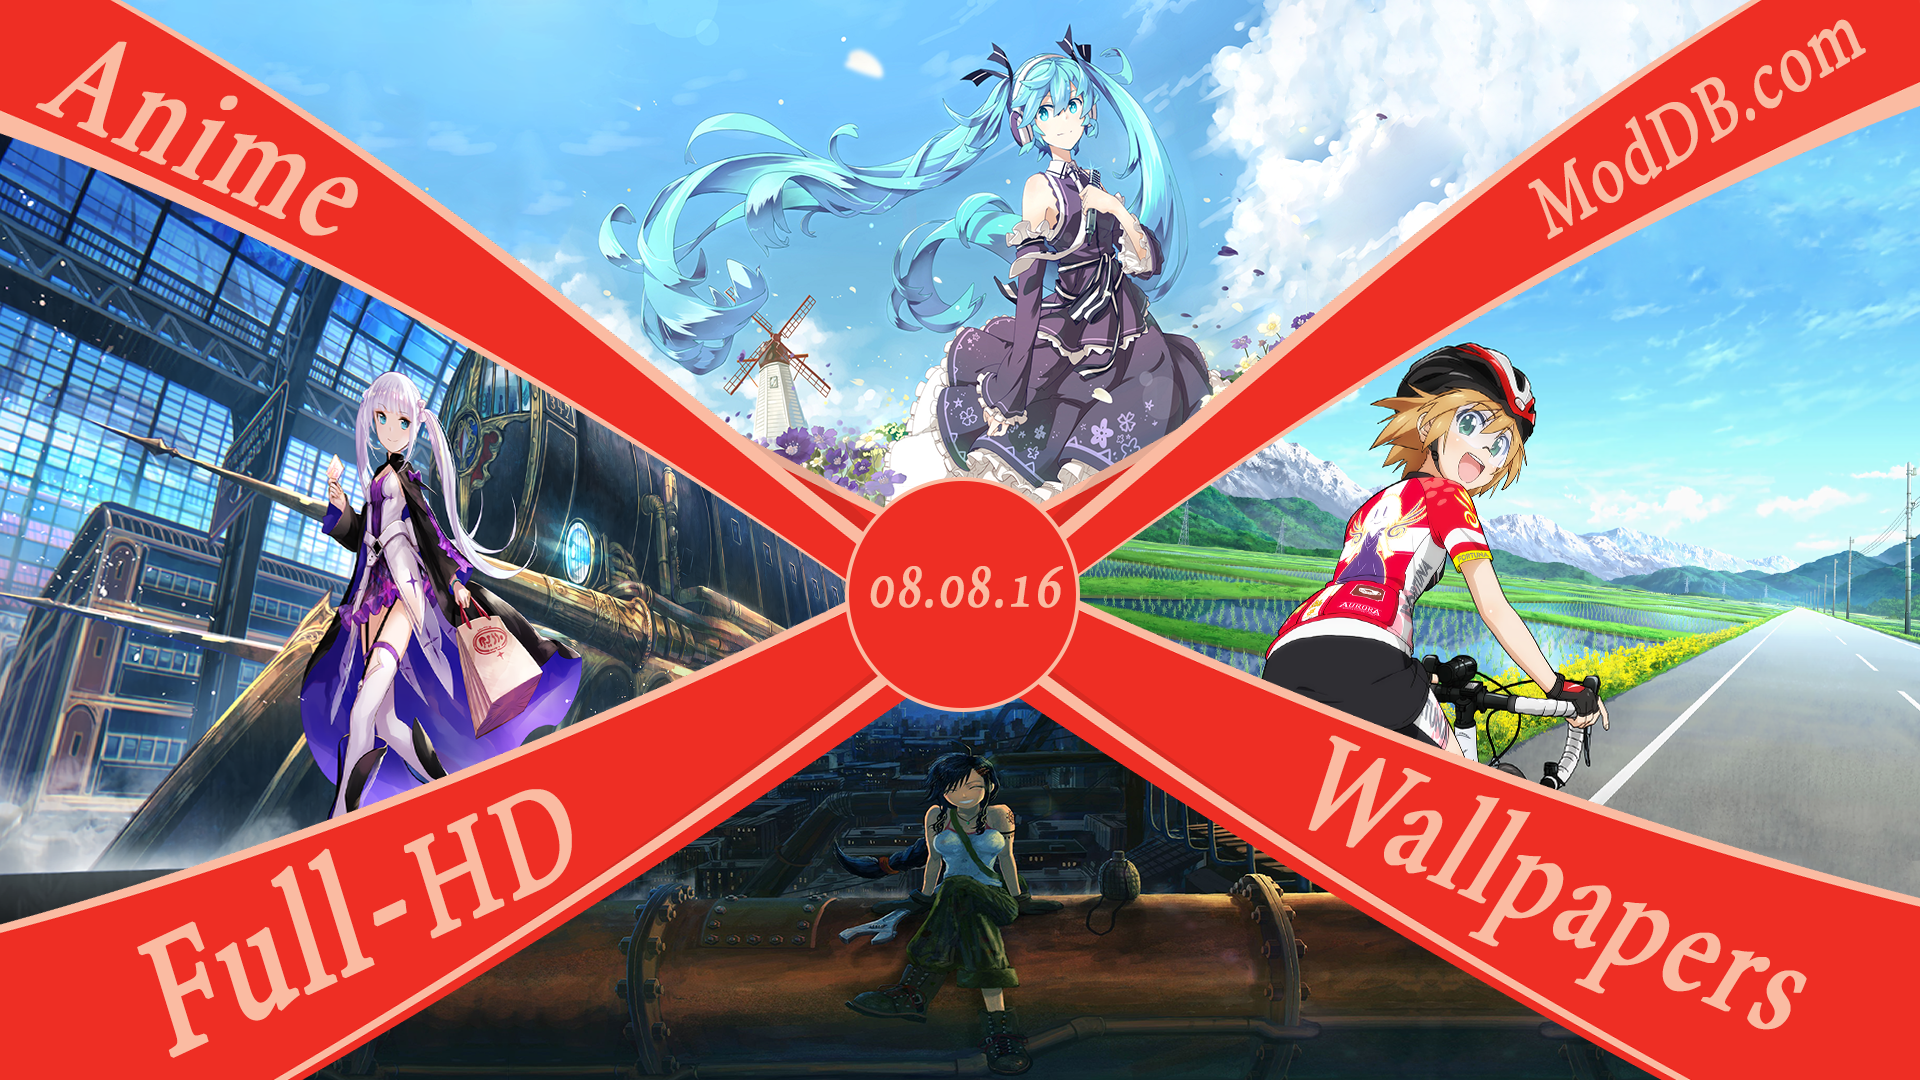 Old Anime Wallpaper's (Full-HD) - 18.08.14 file - Animes' Heaven - ModDB